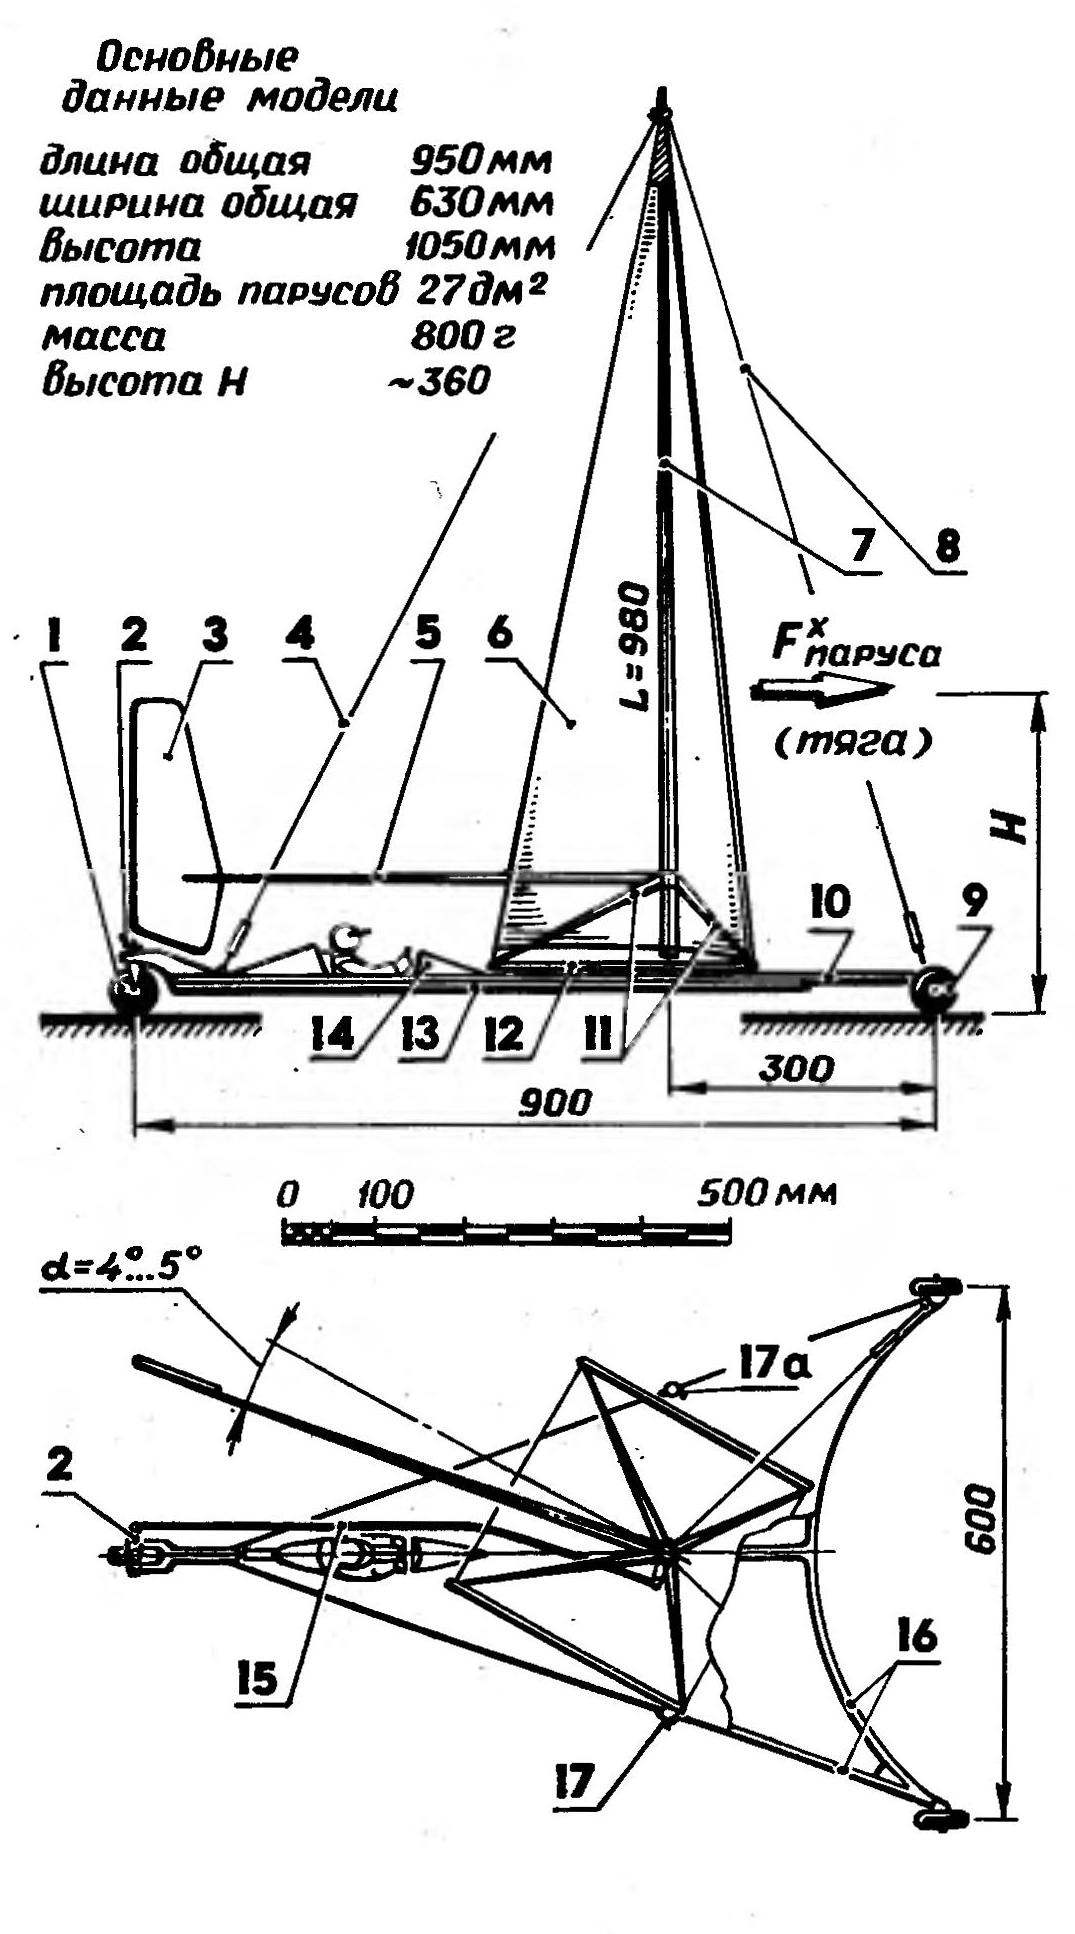 R and p. 2. Sailing the car with a pyramidal sail